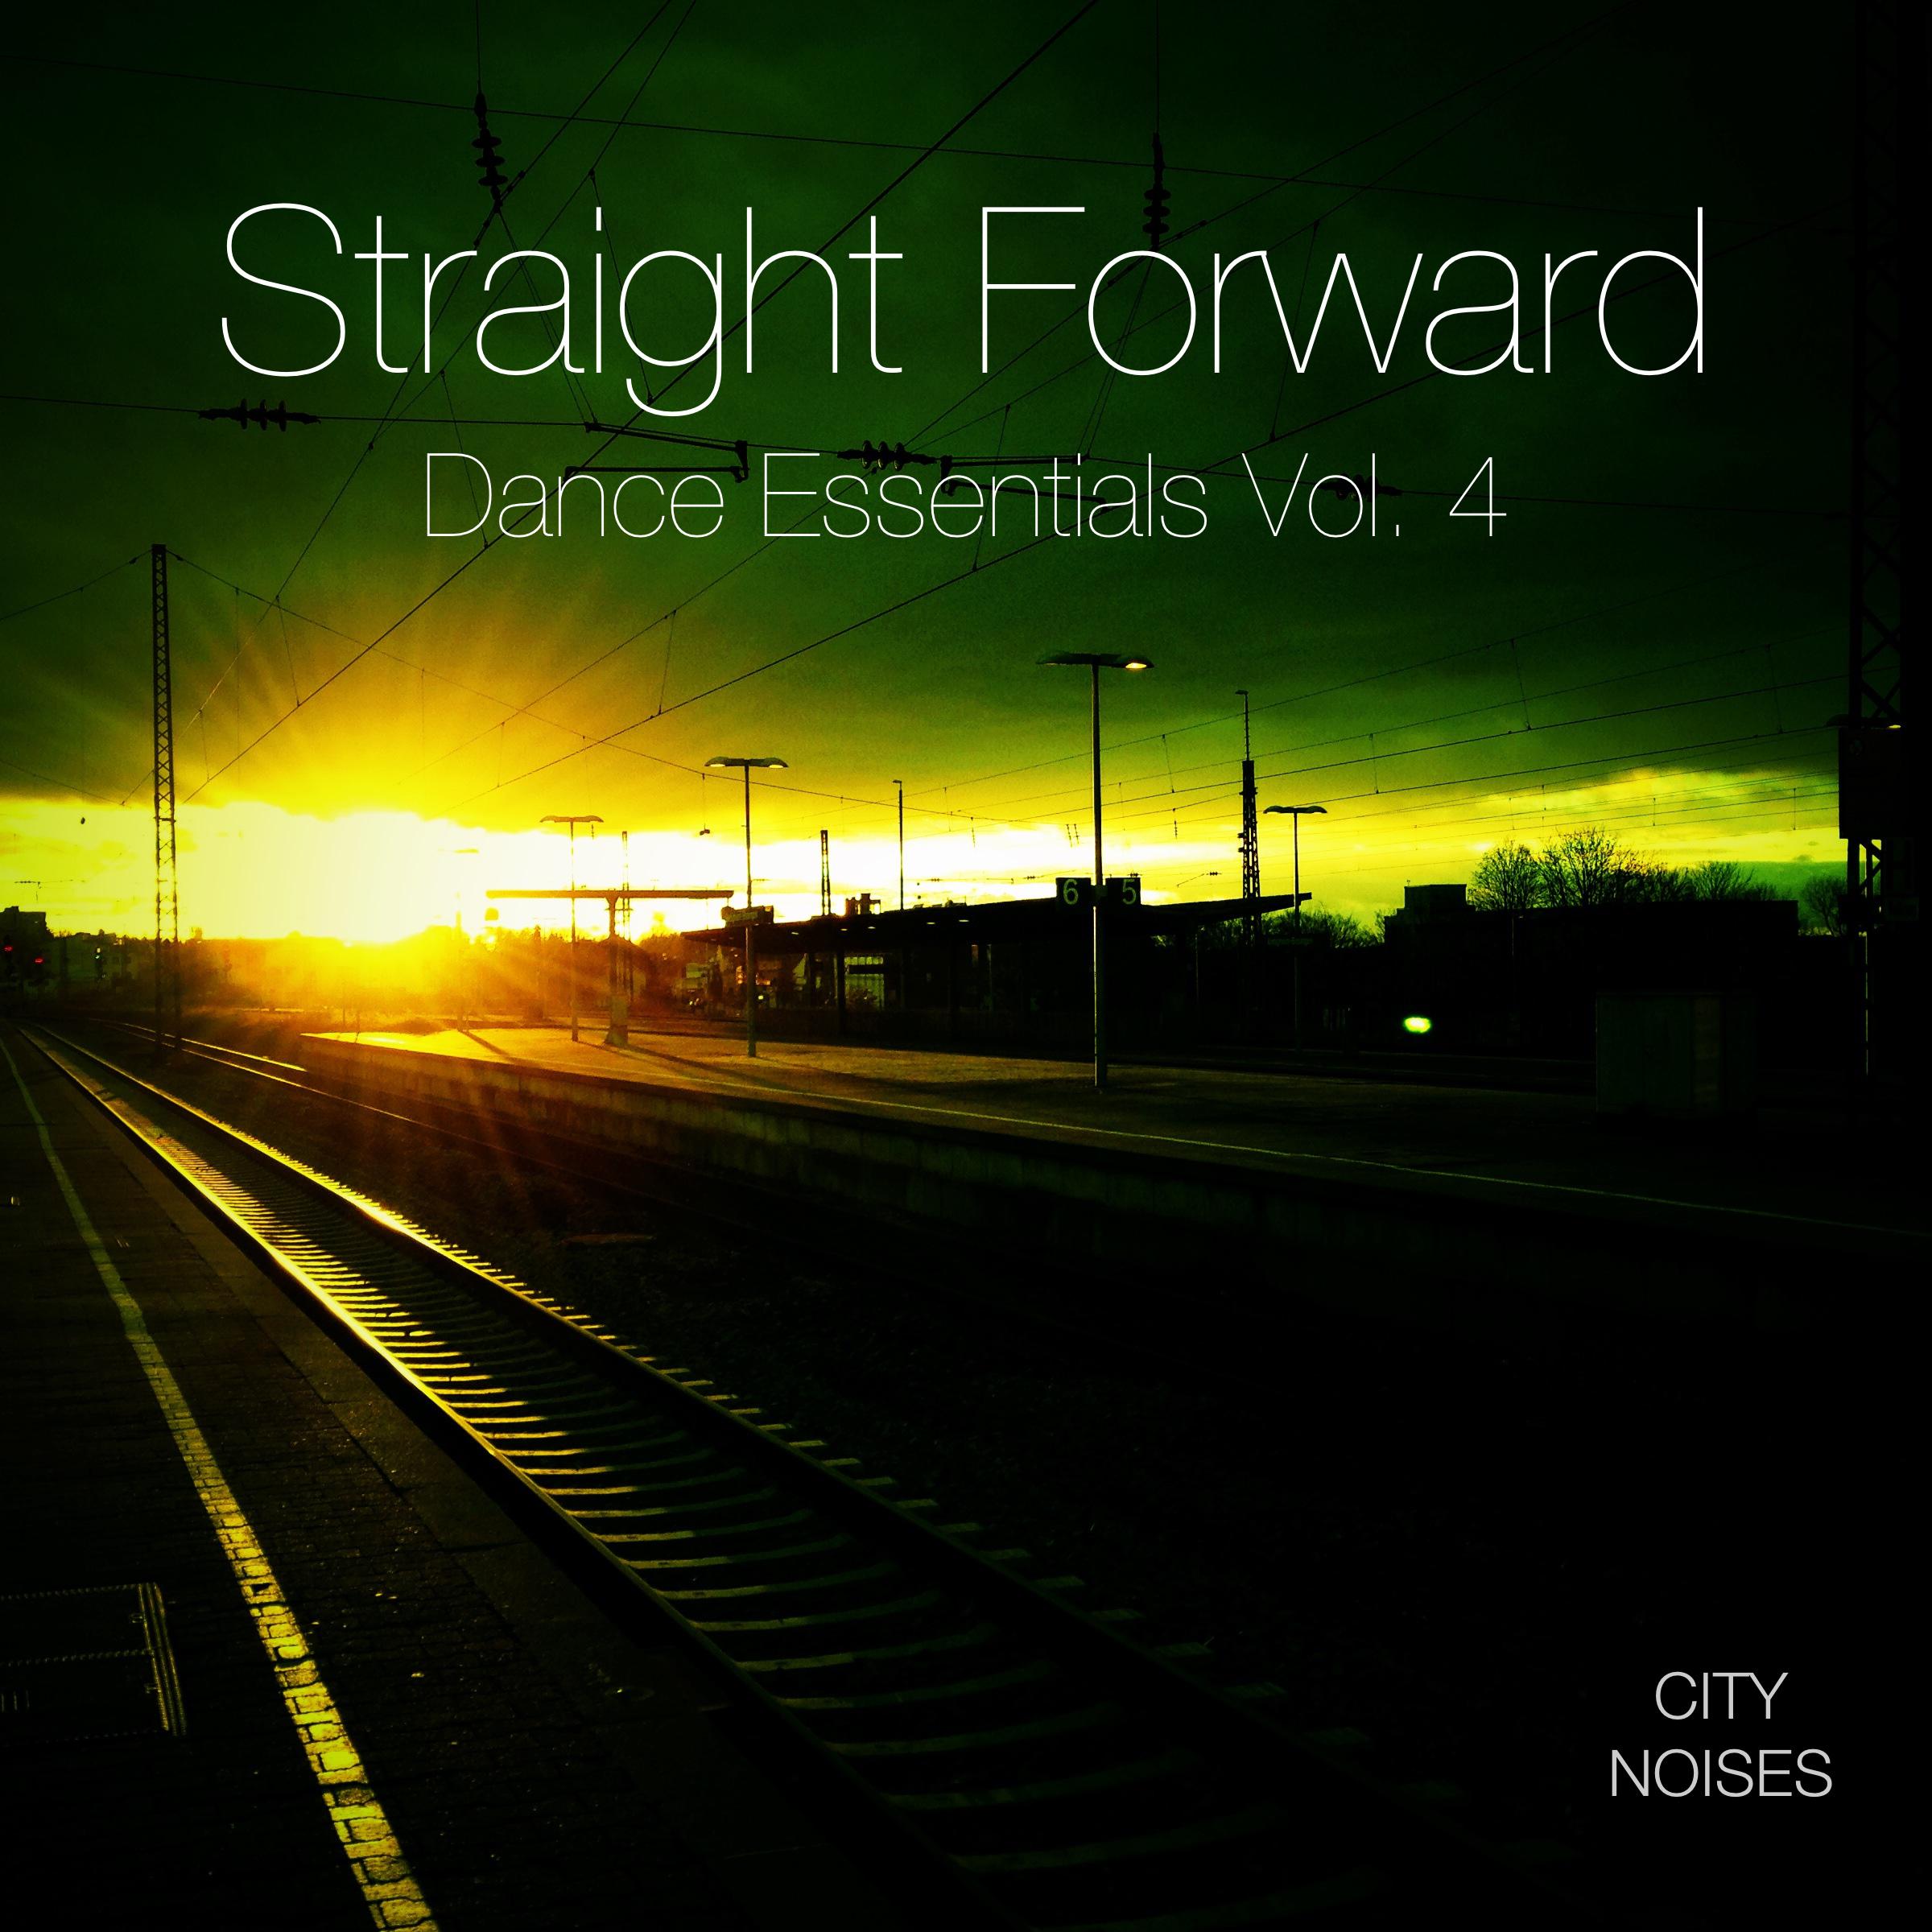 Straight Forward, Vol. 4 - Dance Essentials